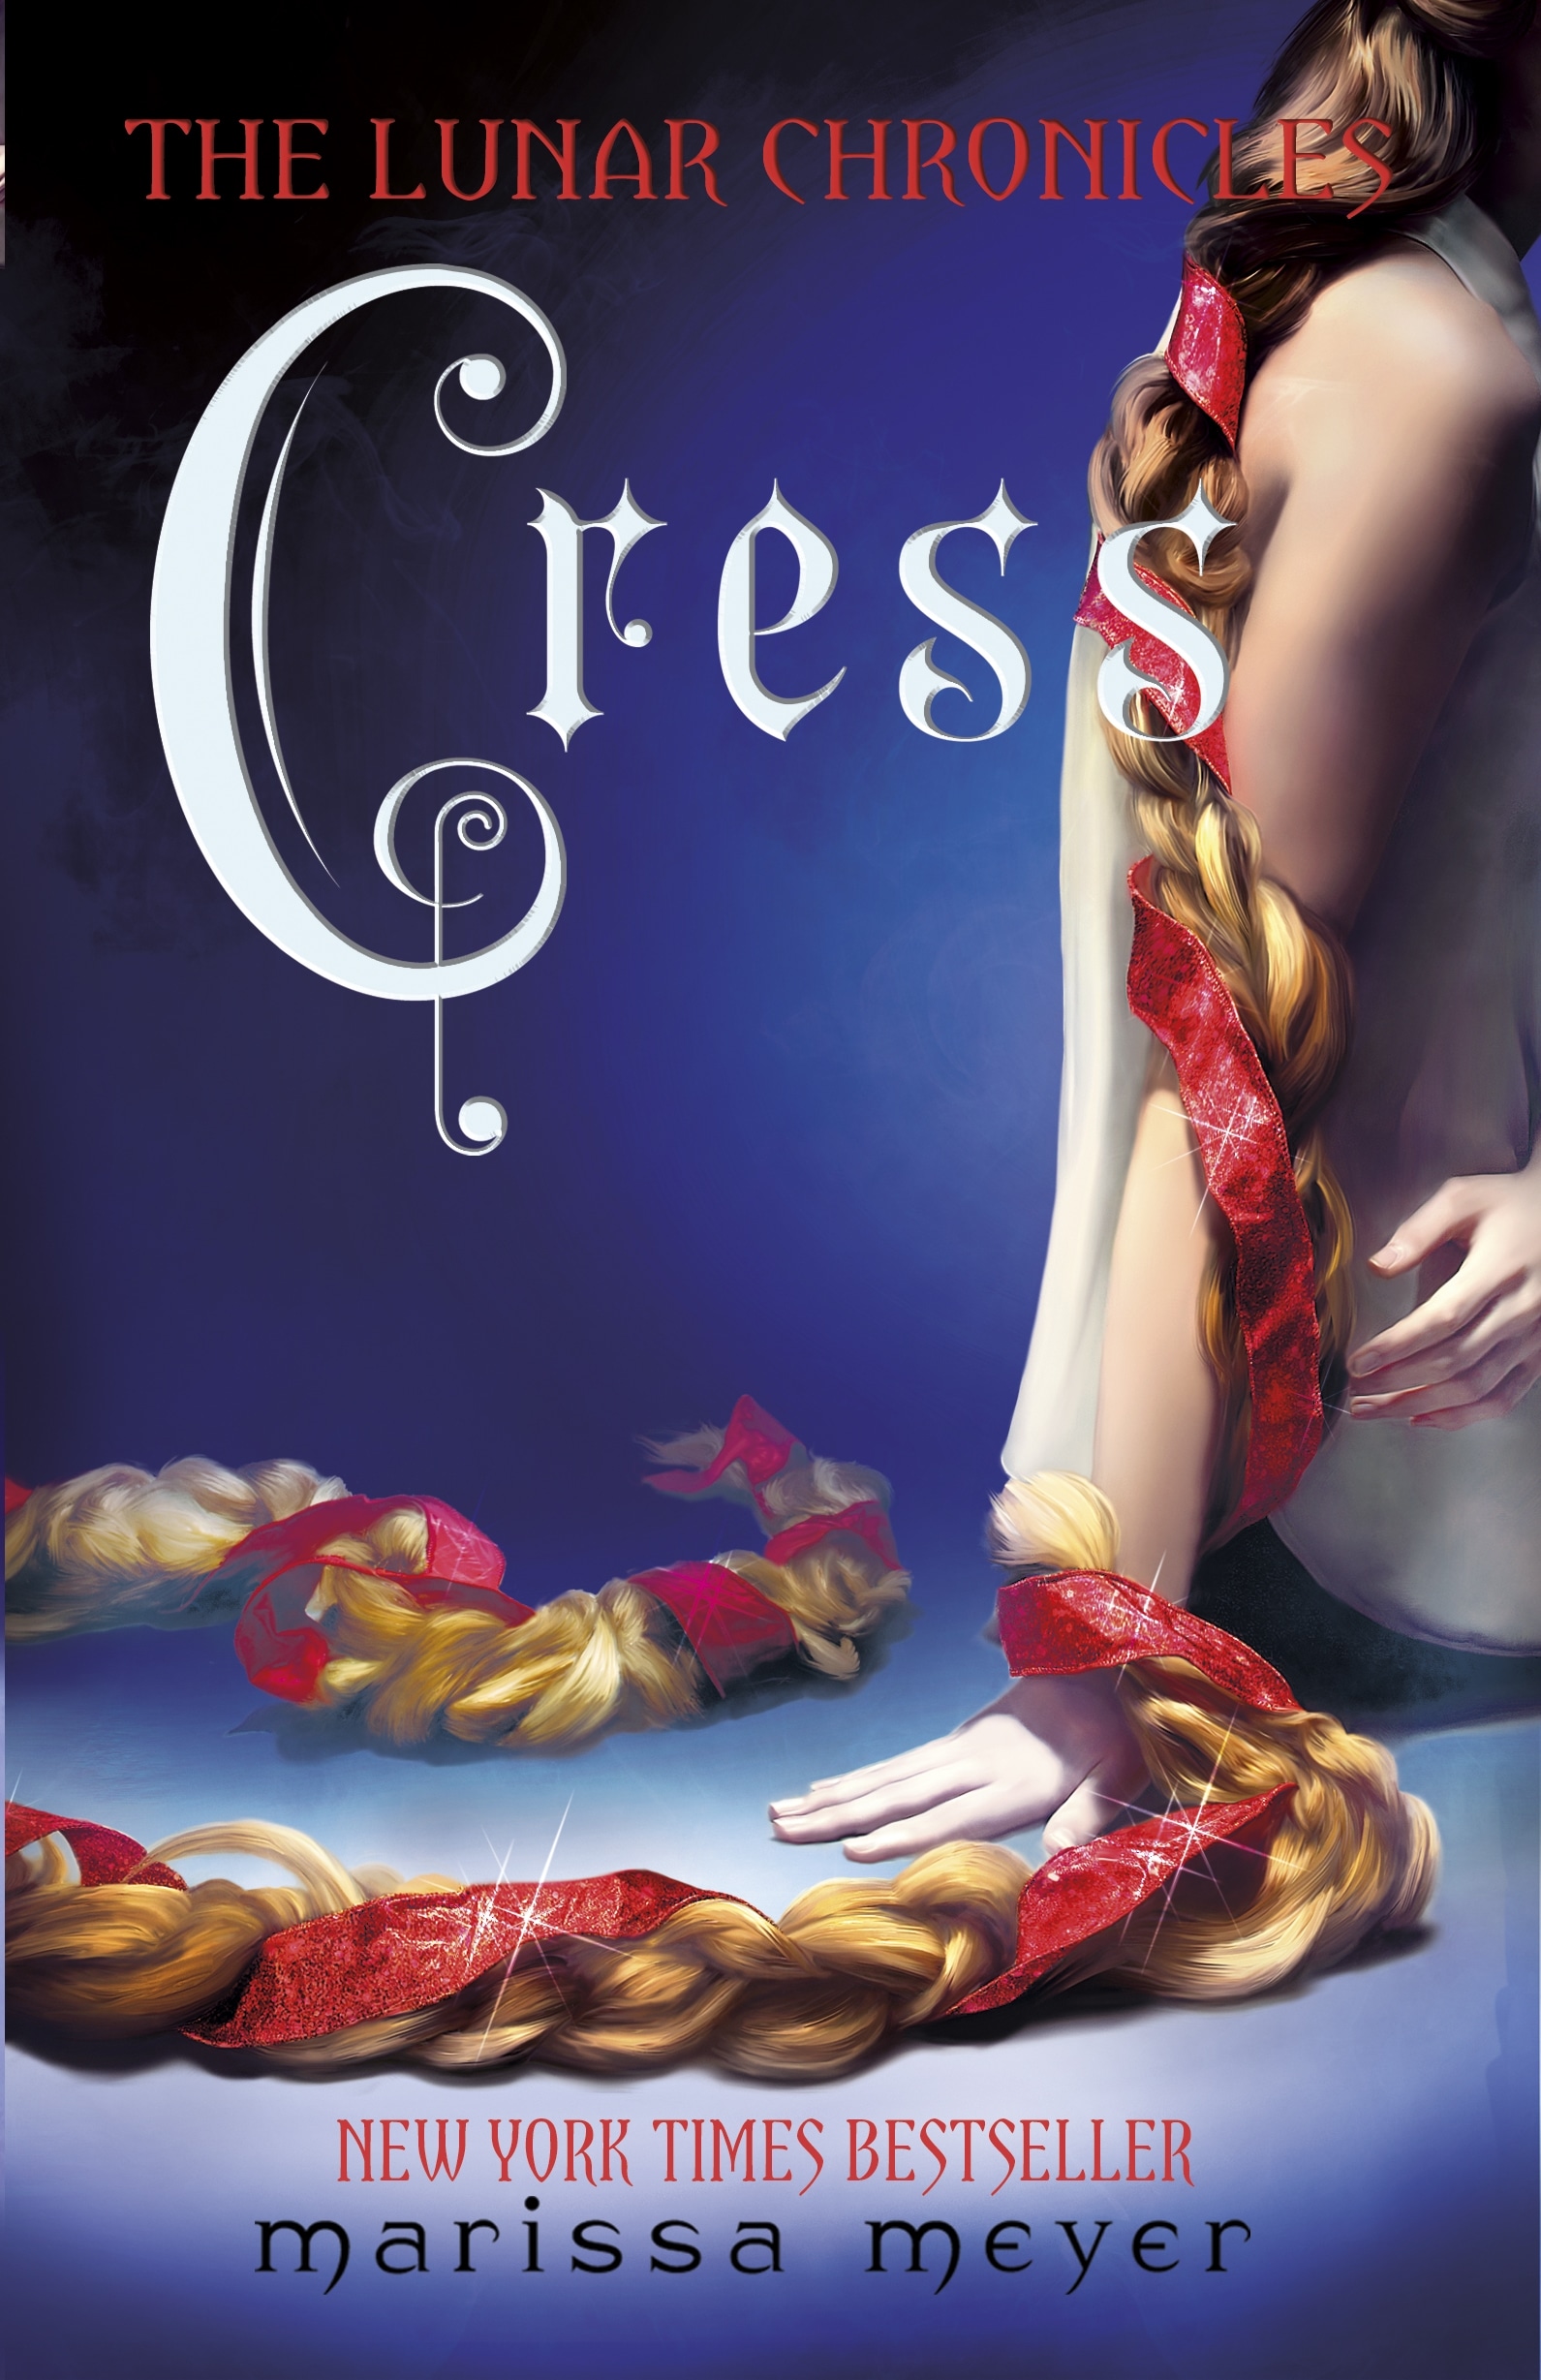 Book “Cress (The Lunar Chronicles Book 3)” by Marissa Meyer — February 6, 2014